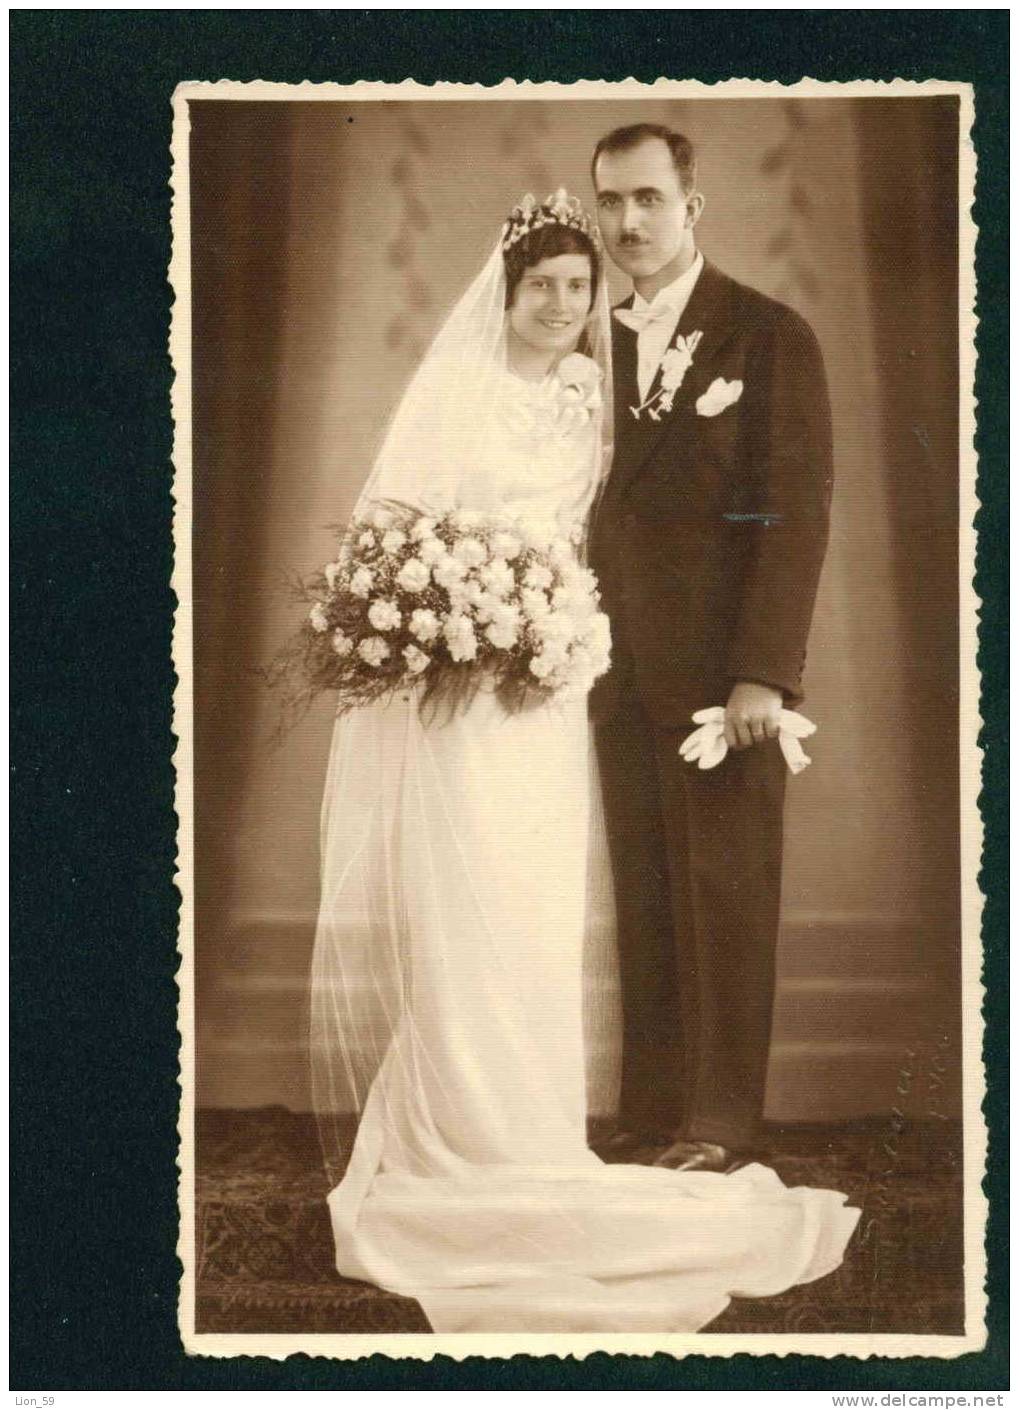 D3070 / Marriages  WEDDING , BRIDE W BRIDEGROOM Bulgaria 1930s Vintage REAL Photo PHOTOGRAPHER "SALASH" - ROUSSE - Noces